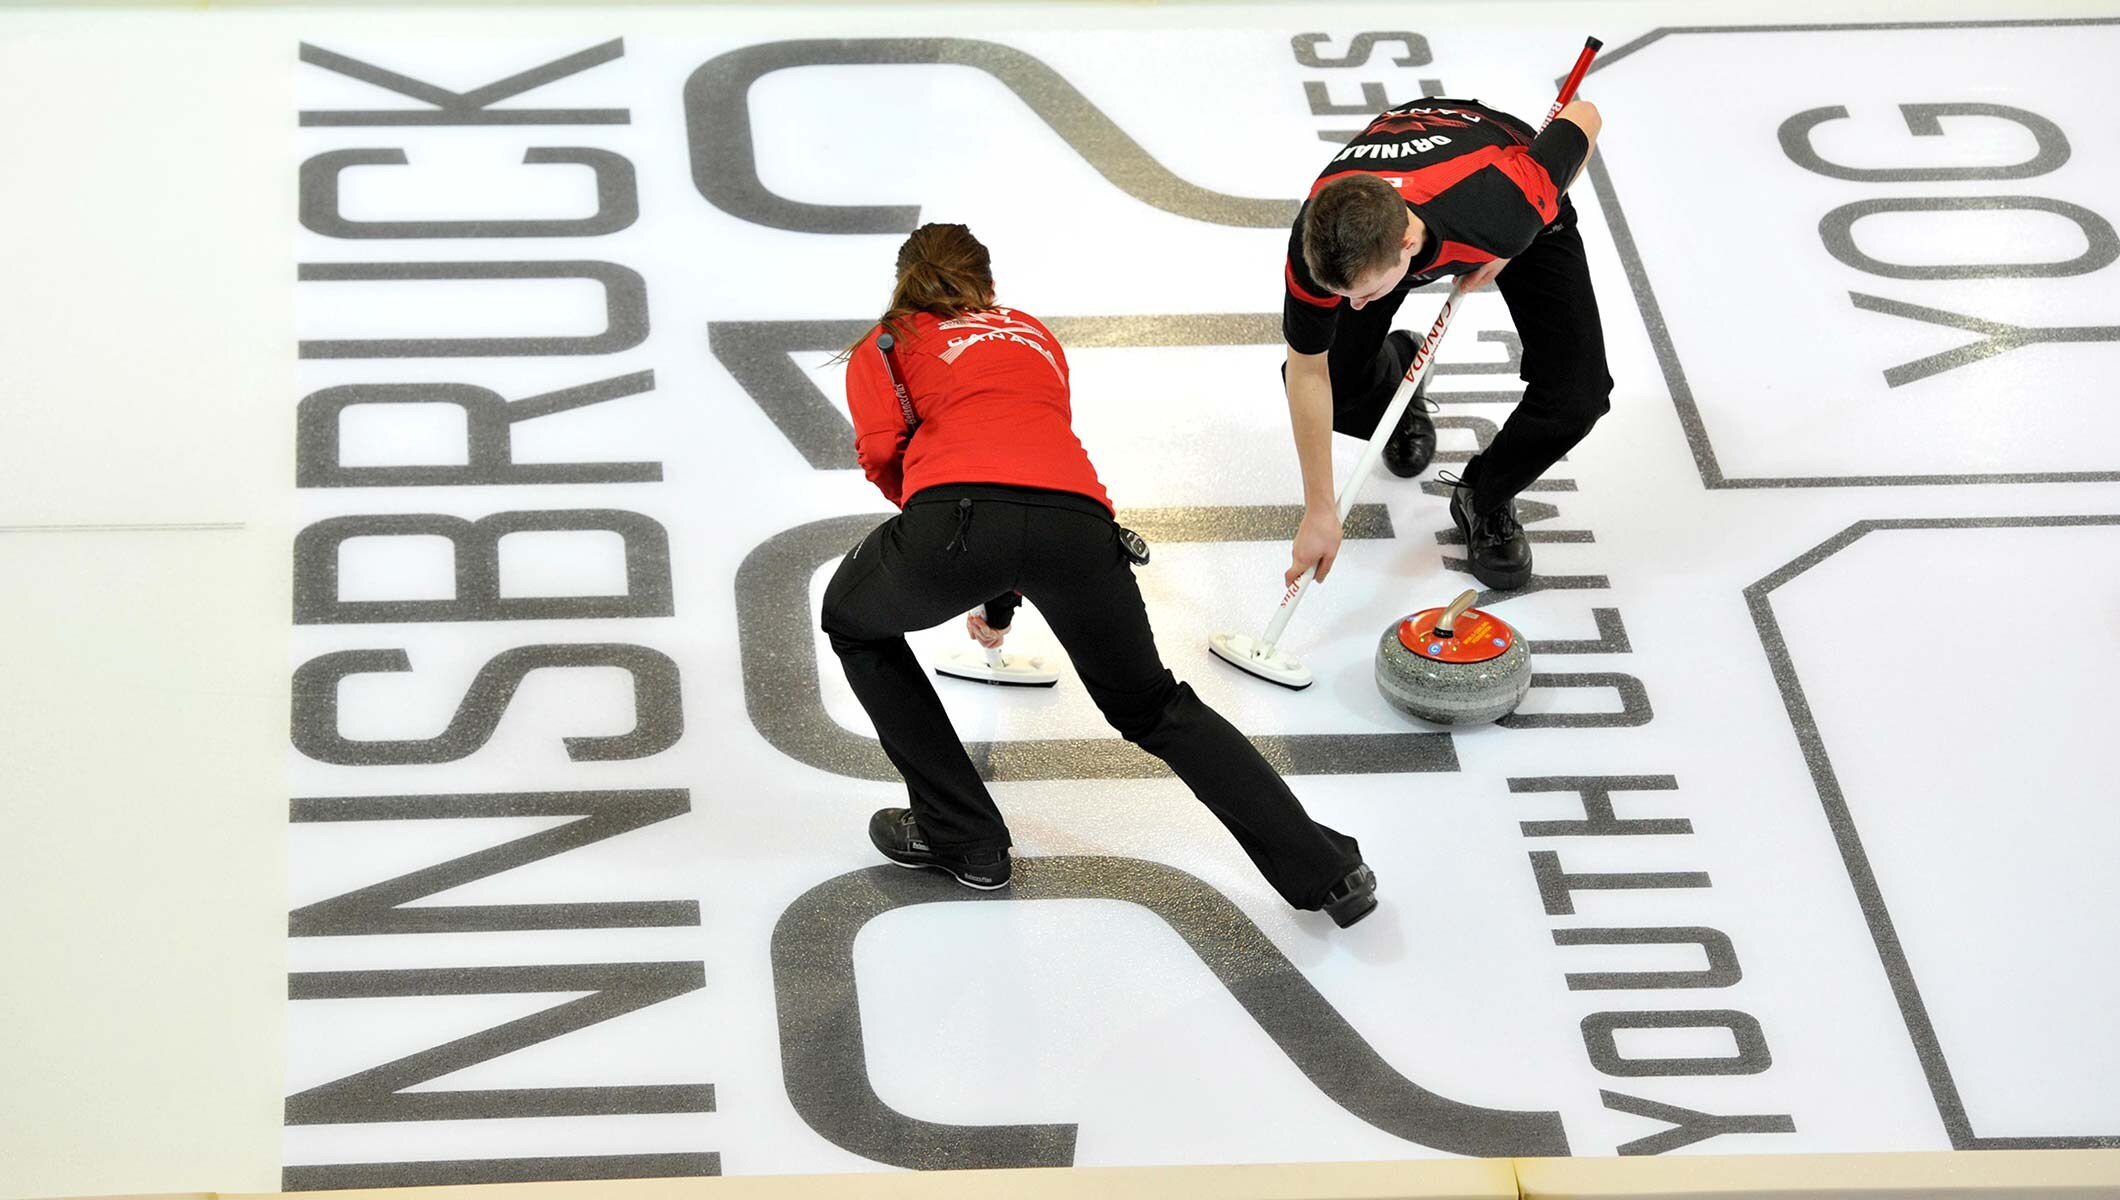 Innsbruck 2012 Winter YOG, Curling, Mixed team competition